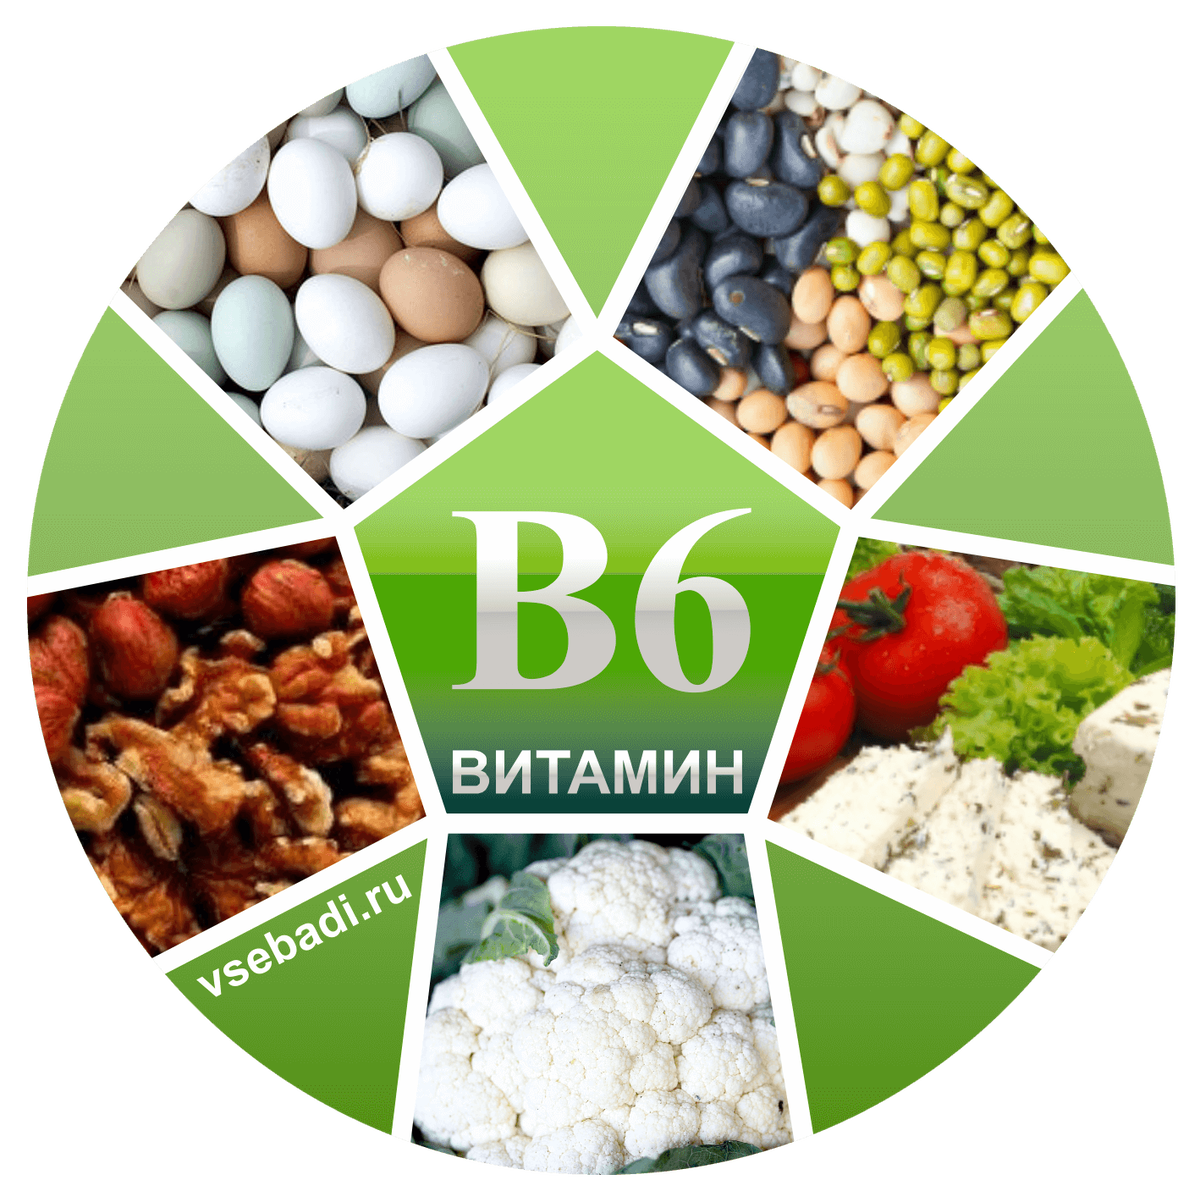 Витамин б 6 применение. Витамины группы b6. Витамин b6 название витамина. Витамин b6 источники витамина. Витамин b6 пиридоксин.